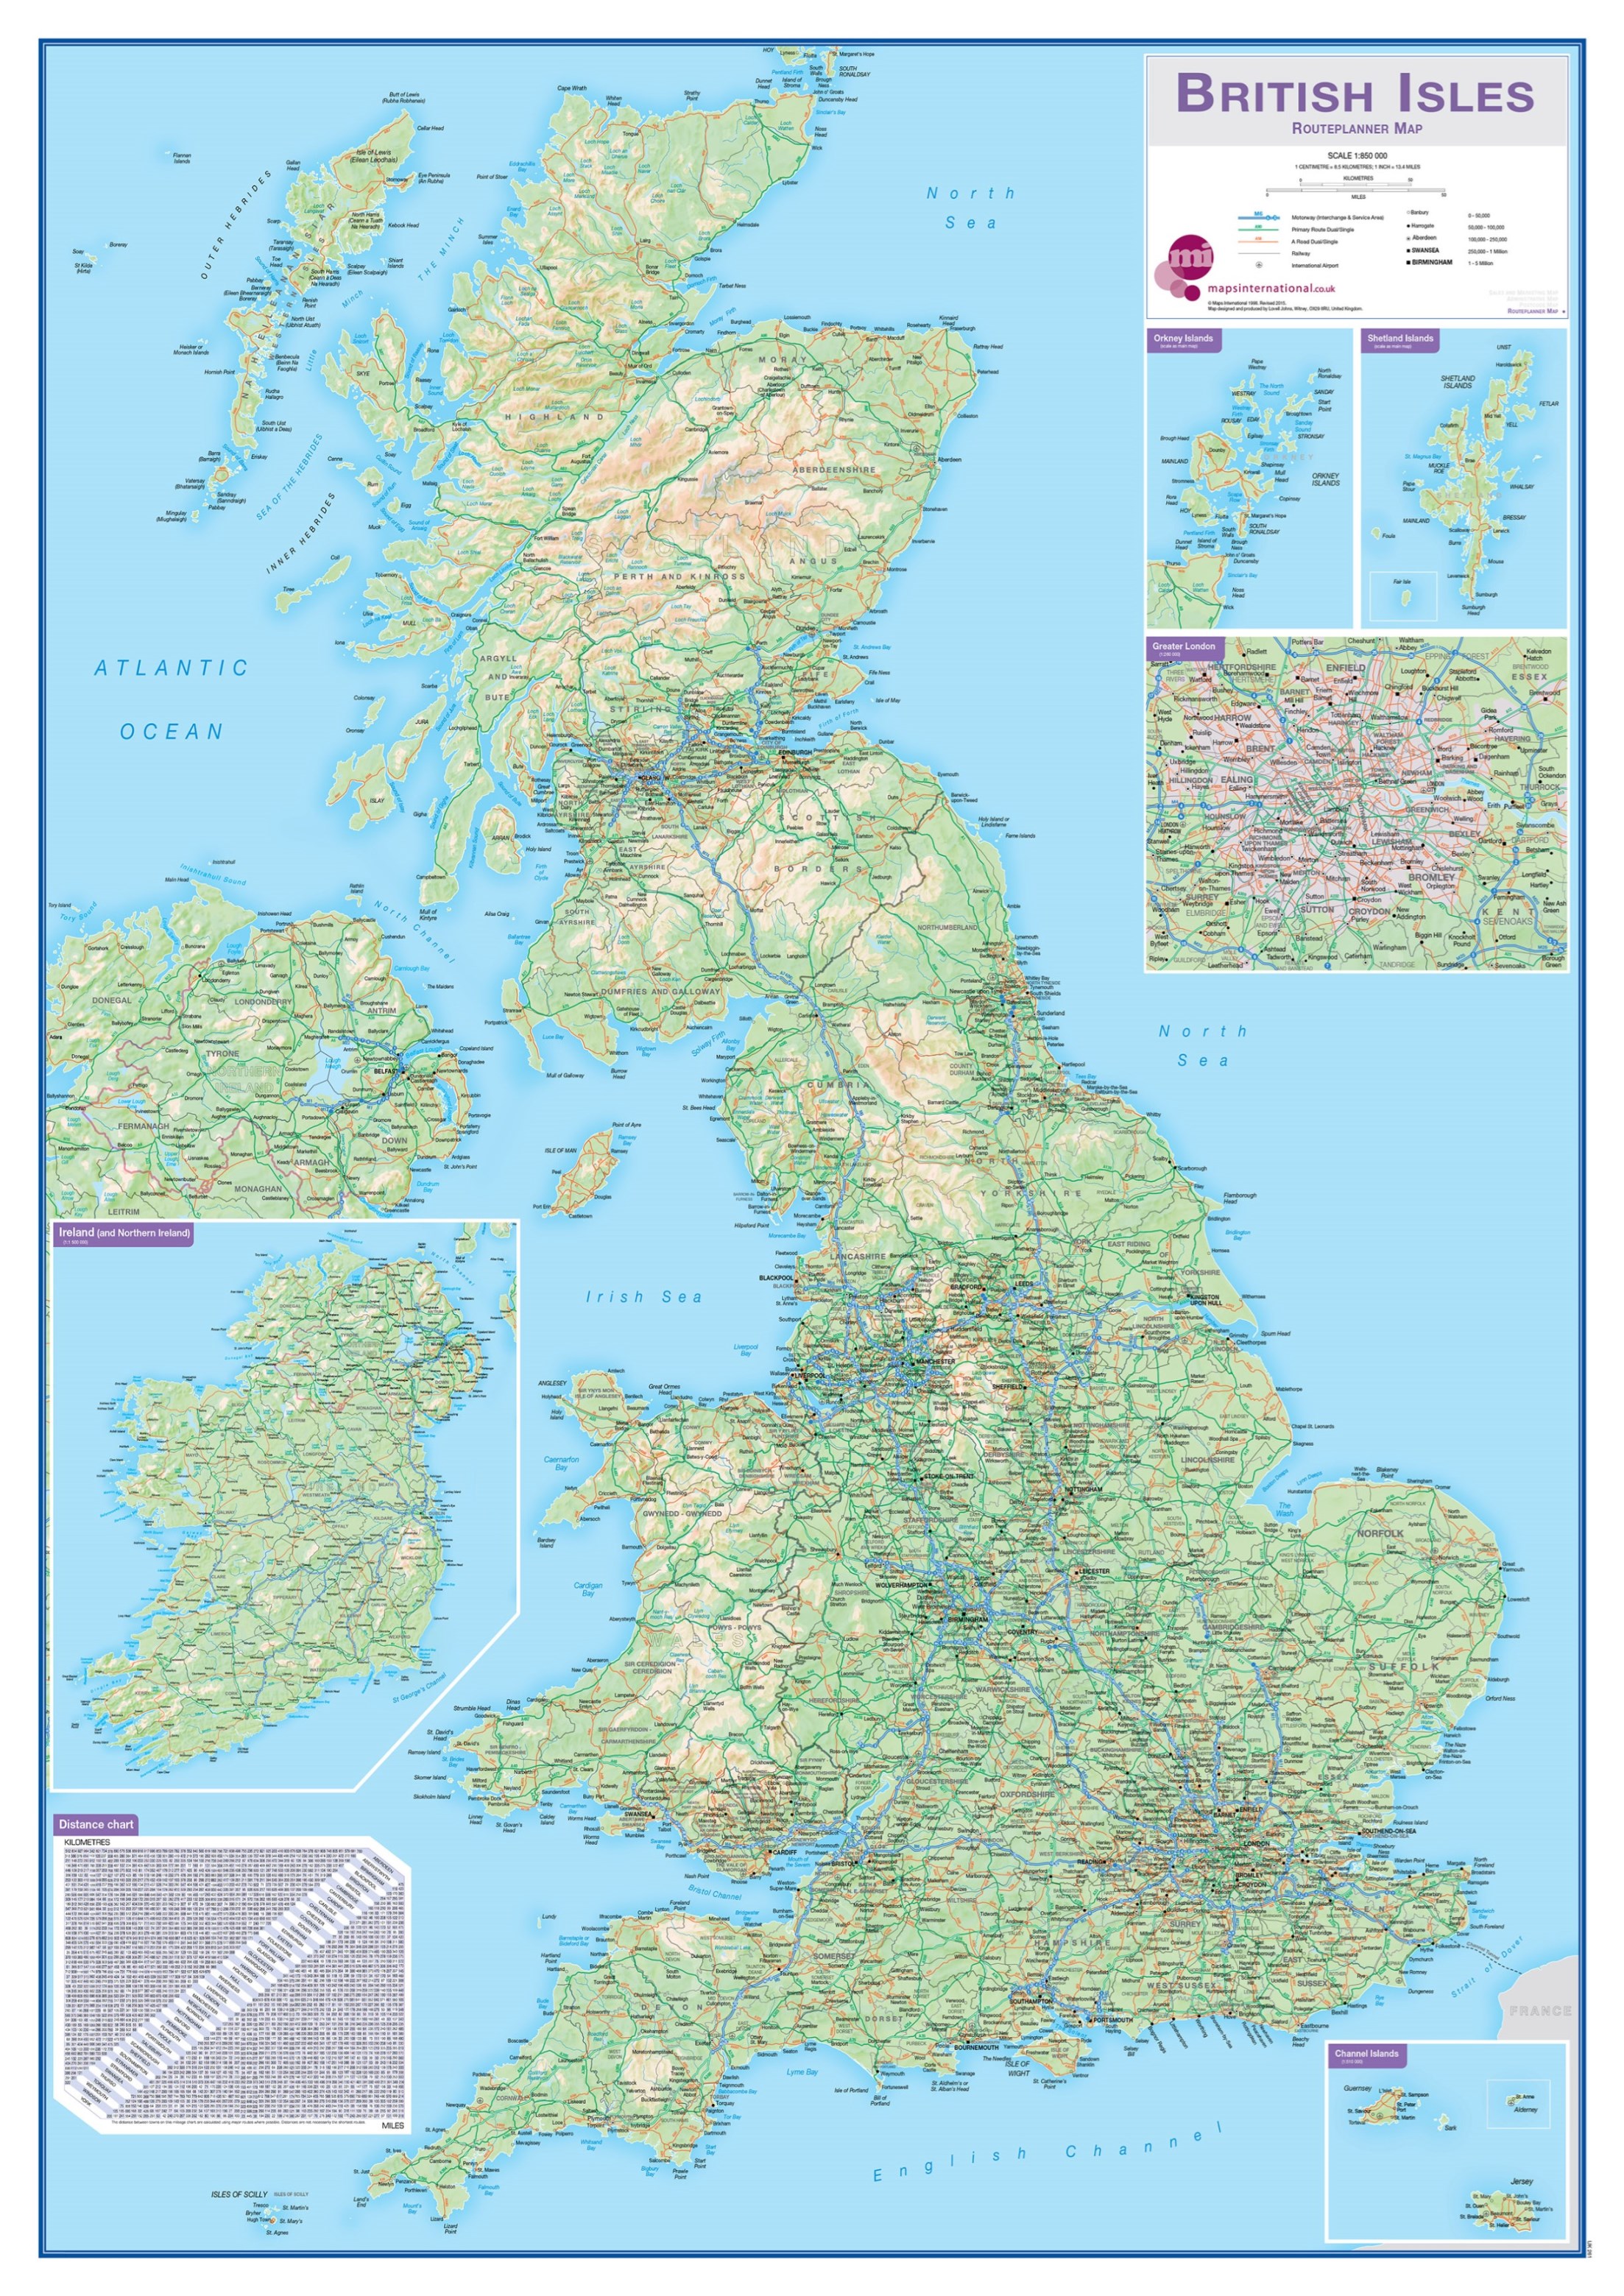 Online bestellen: Wandkaart Engeland - British Isles roadplanning wall map, 84 X 119 cm | Maps International